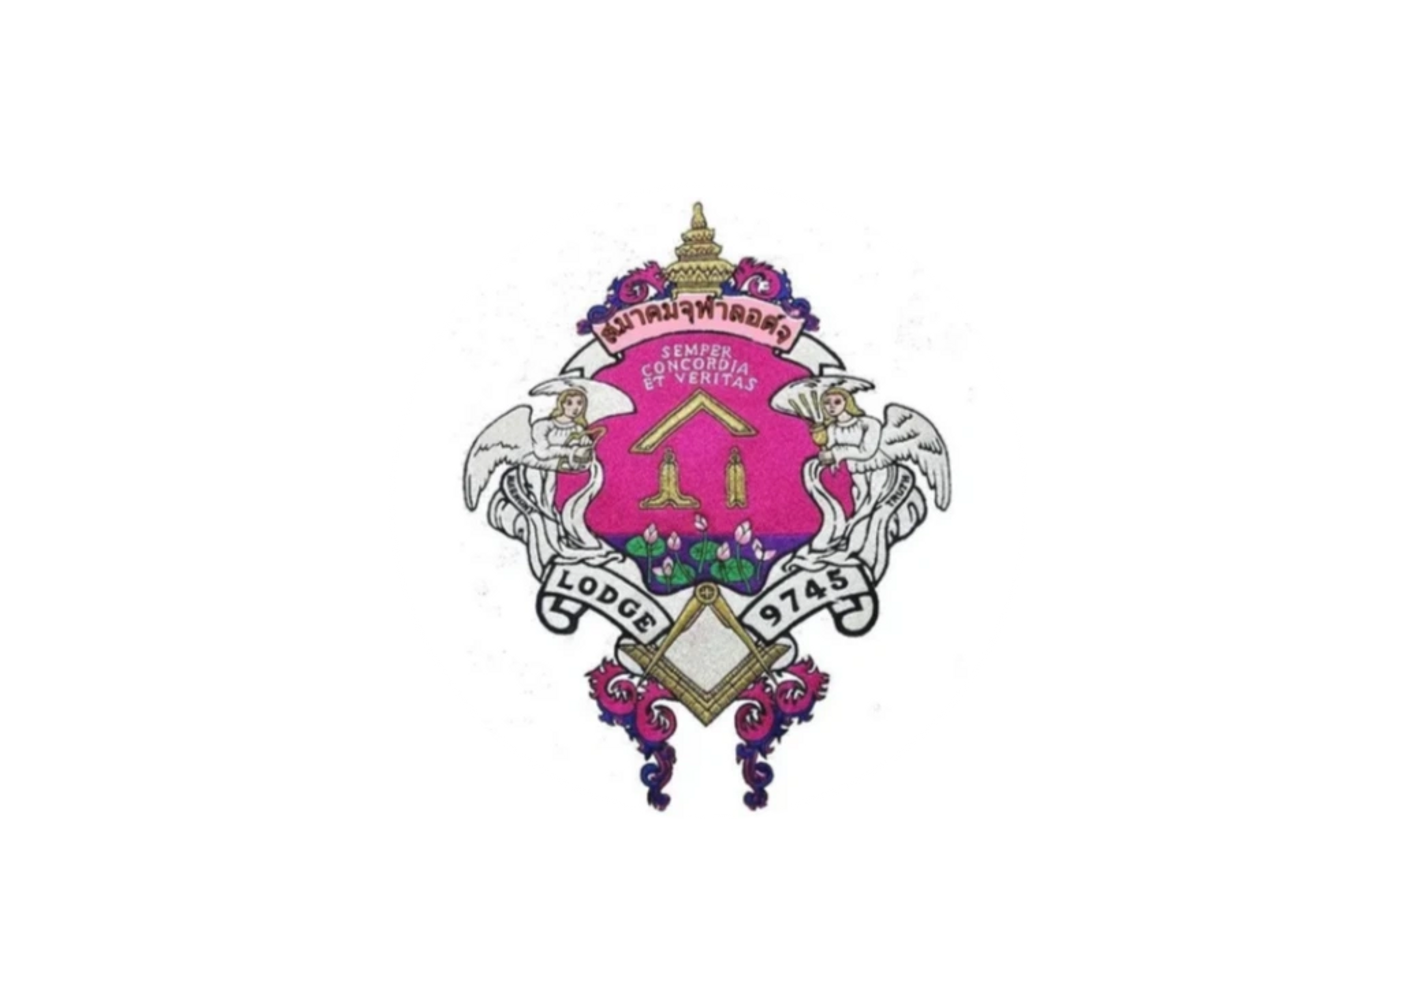 Badge of Chula Lodge 9745 E.C. Masonic Lodge of Freemasons in Thailand